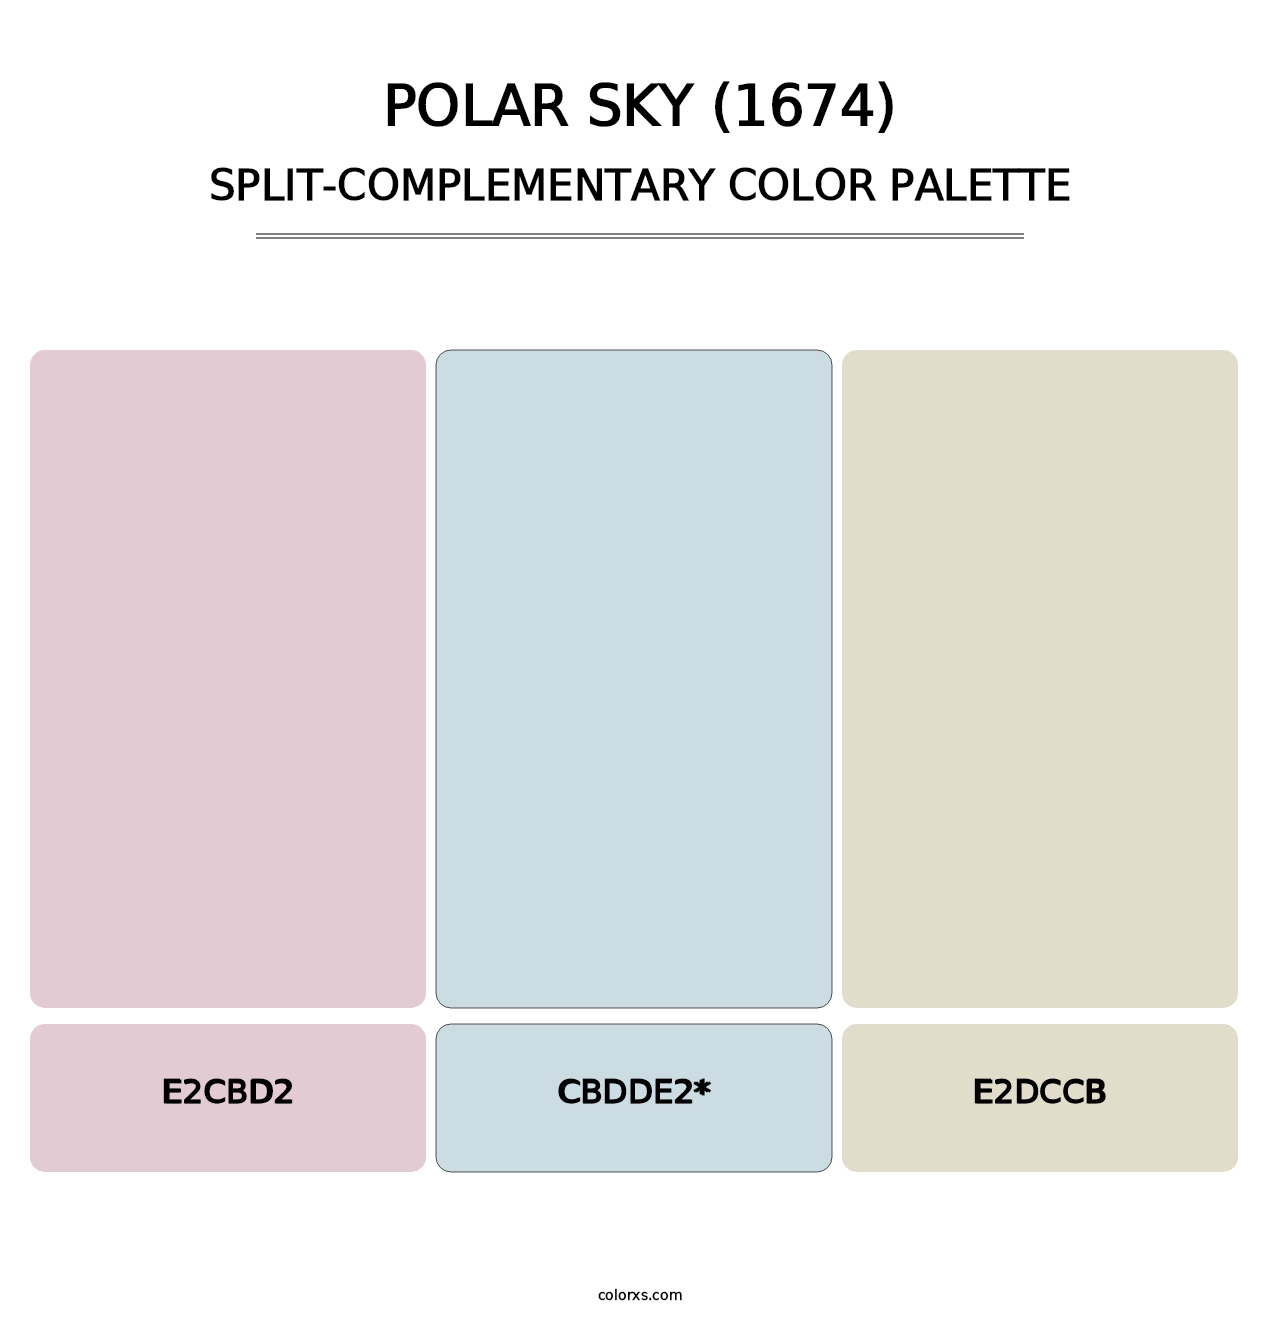 Polar Sky (1674) - Split-Complementary Color Palette